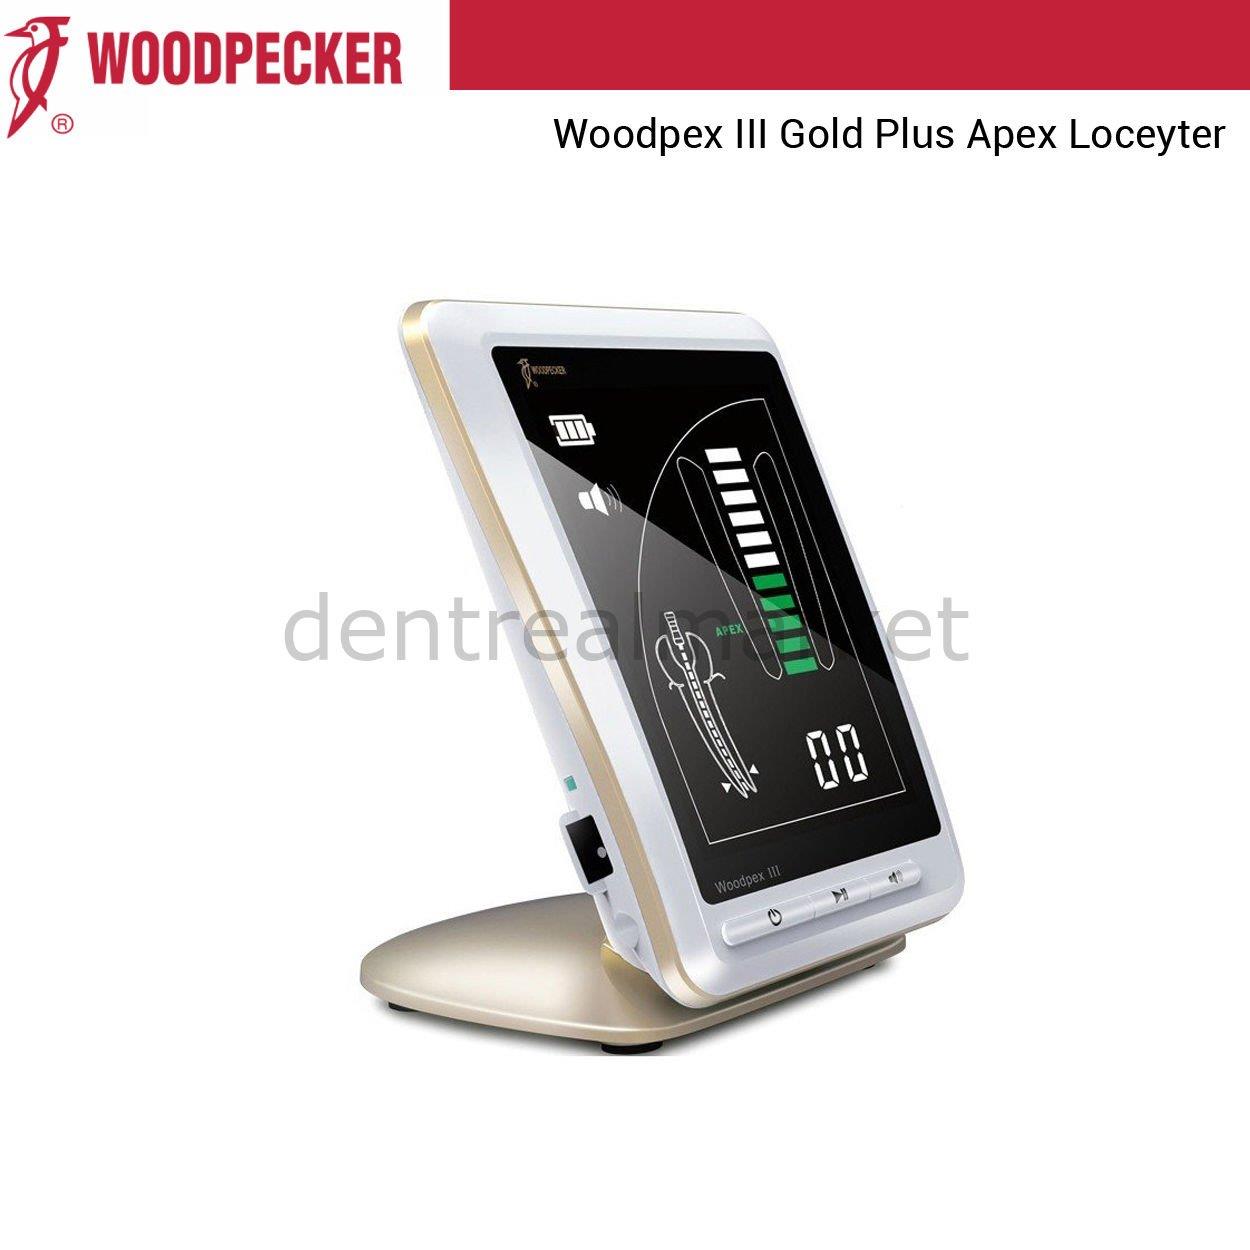 Woodpecker Woodpex III Gold Plus Apex Locator